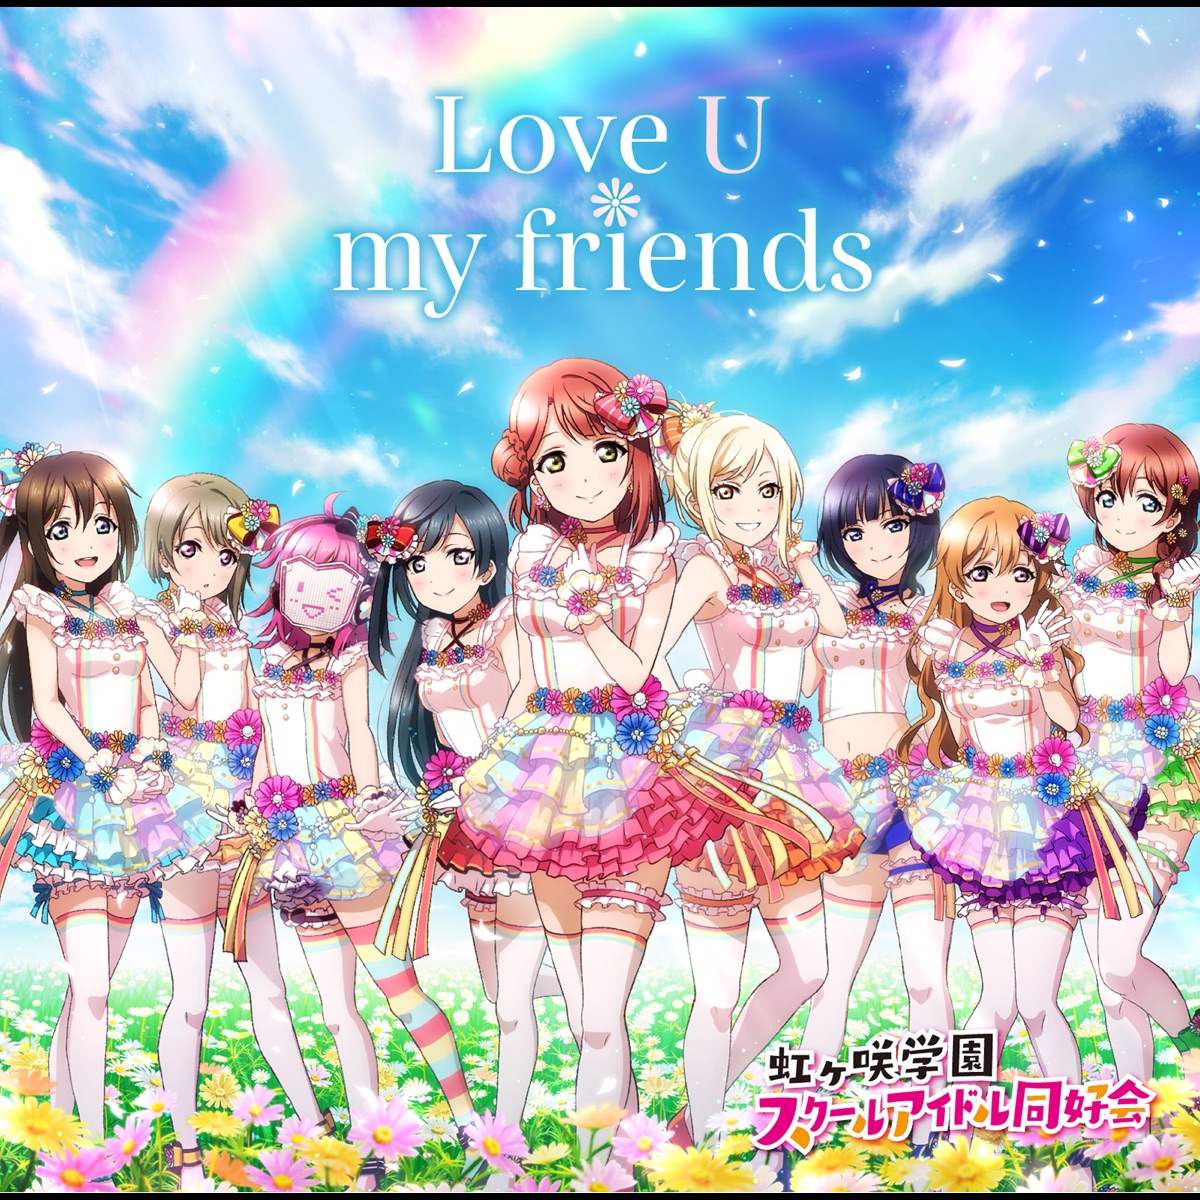 Cover for『Ayumu Uehara (Aguri Onishi) - Kaika Sengen』from the release『Love U my friends』